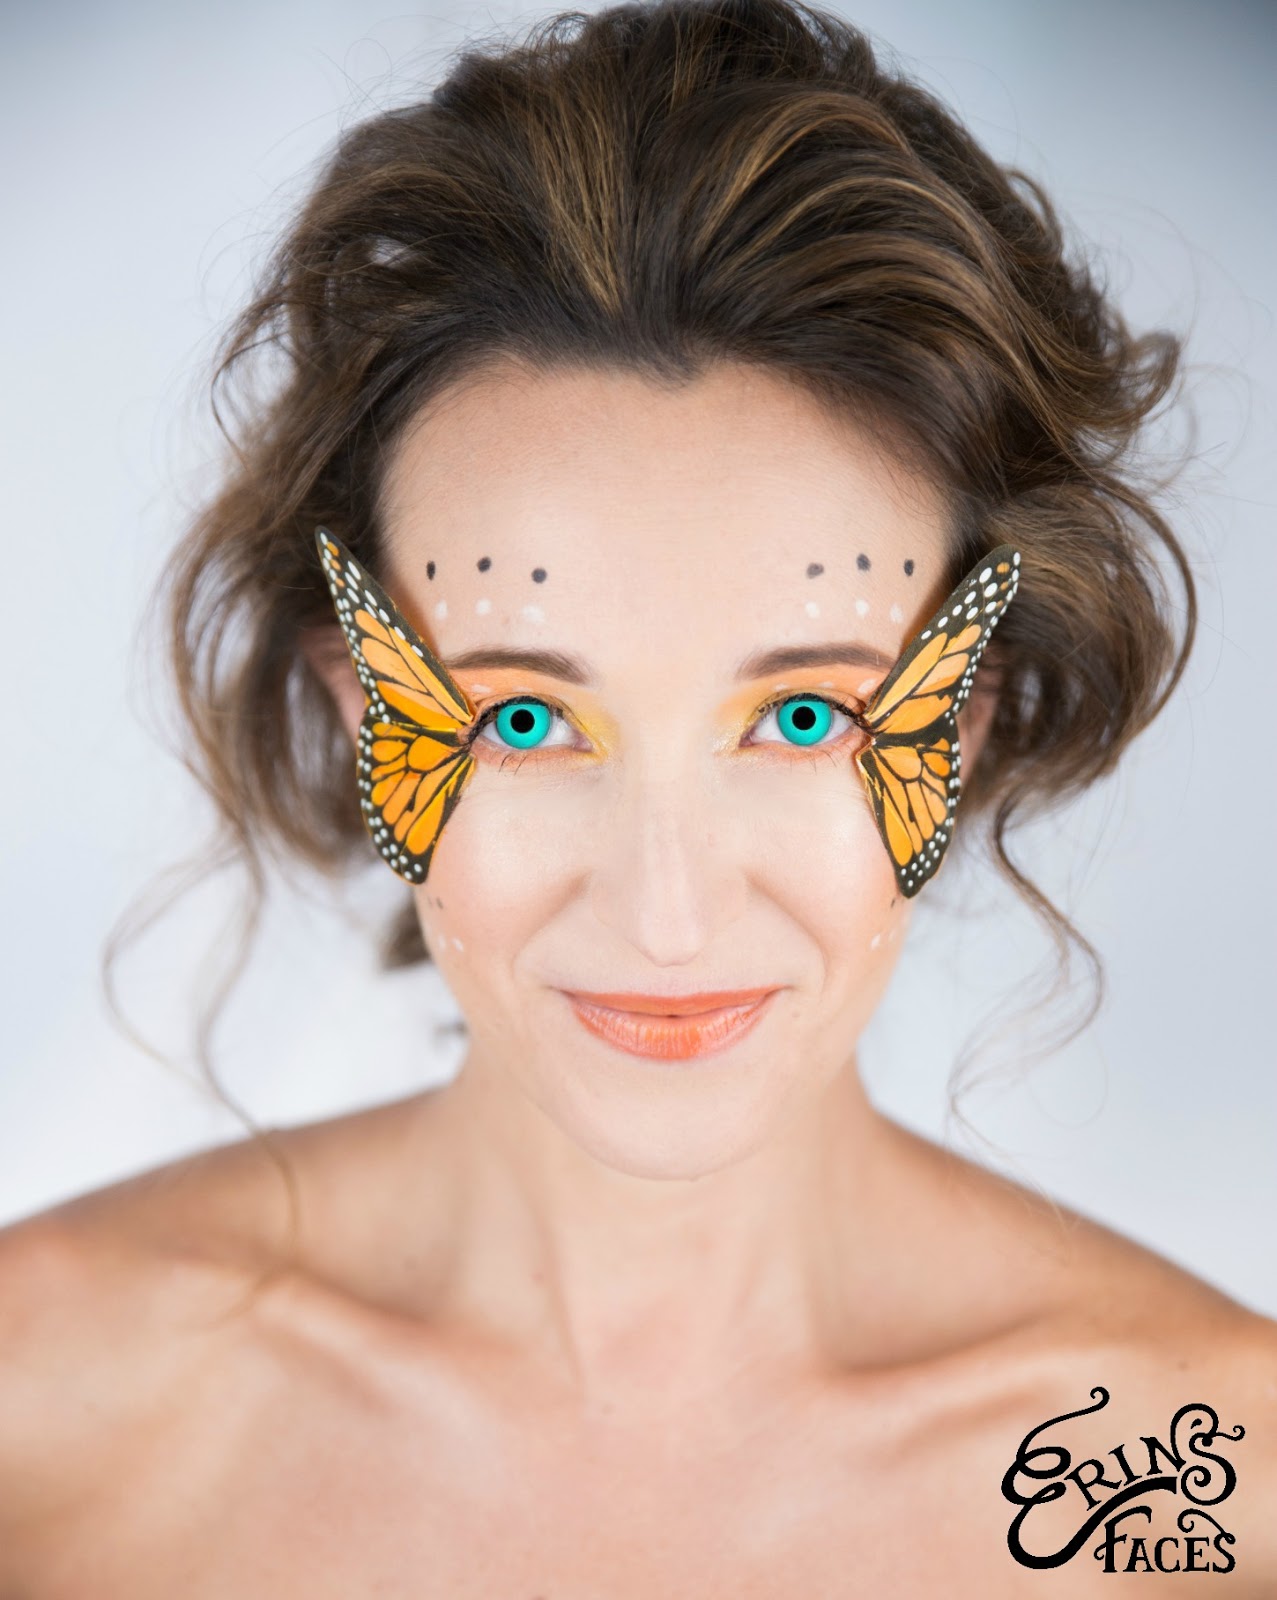 erin s faces Butterfly  Fairy  Halloween Makeup  Tutorial